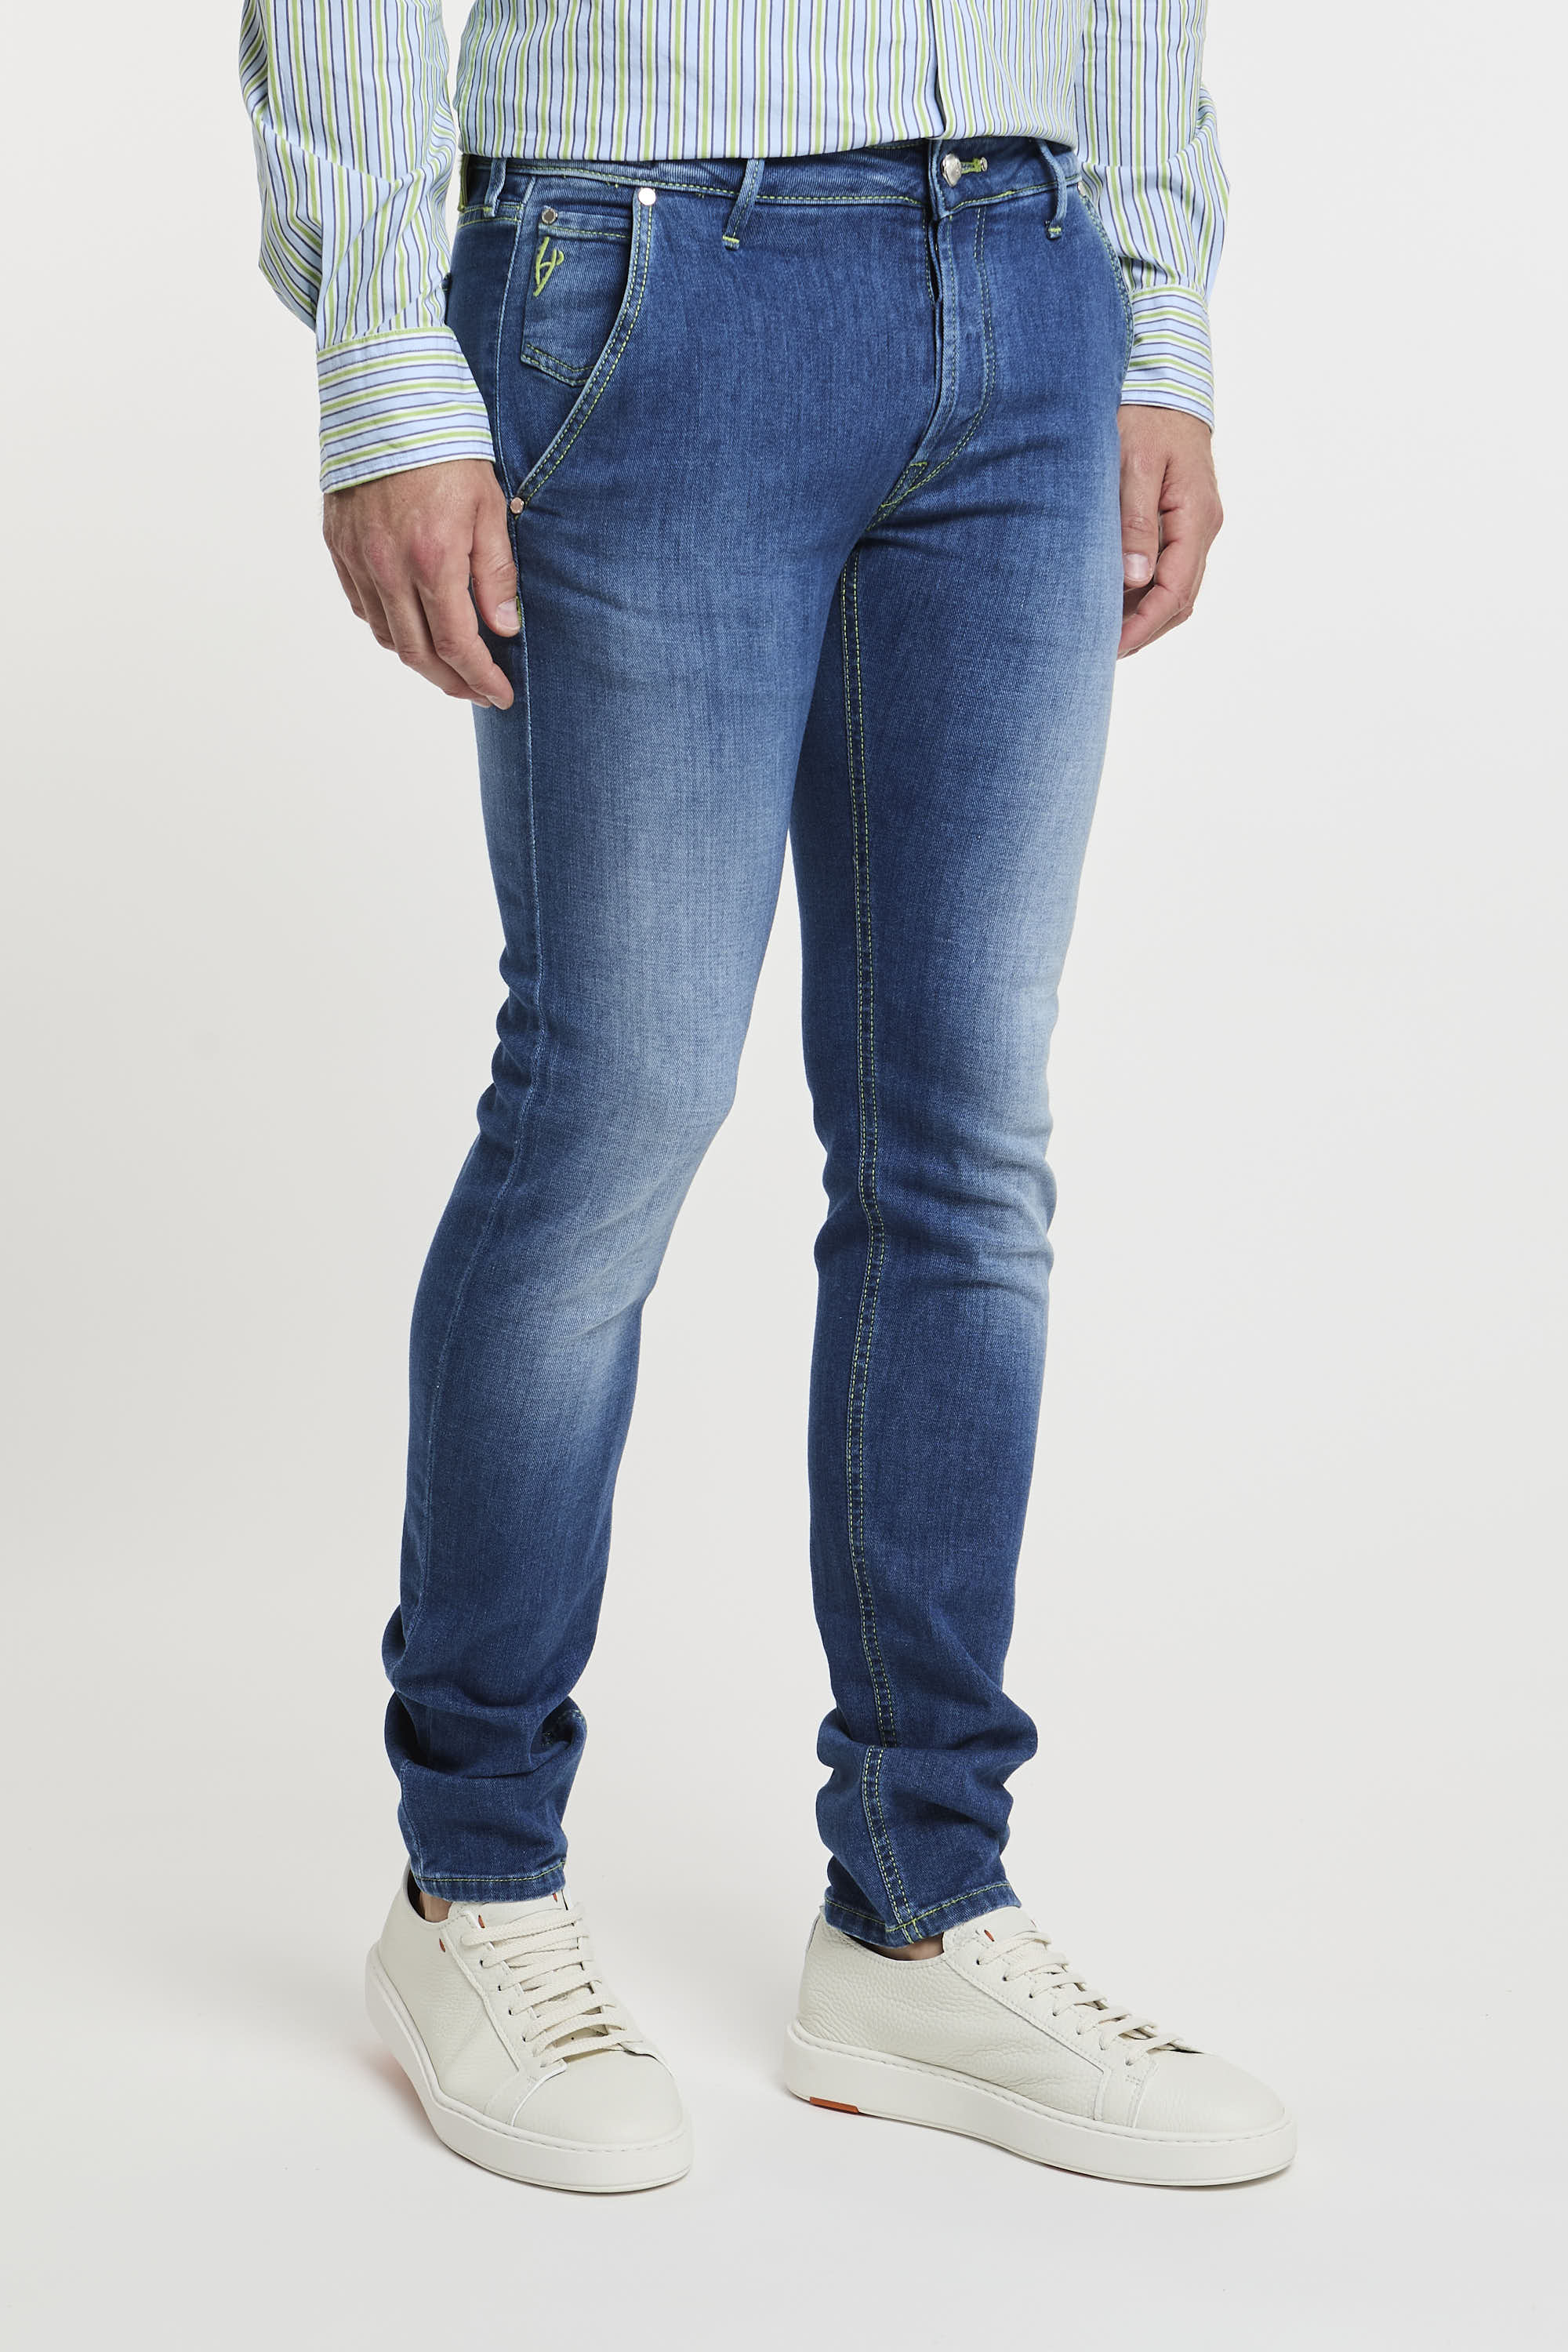 Handpicked Jeans Parma in Cotton Denim-3